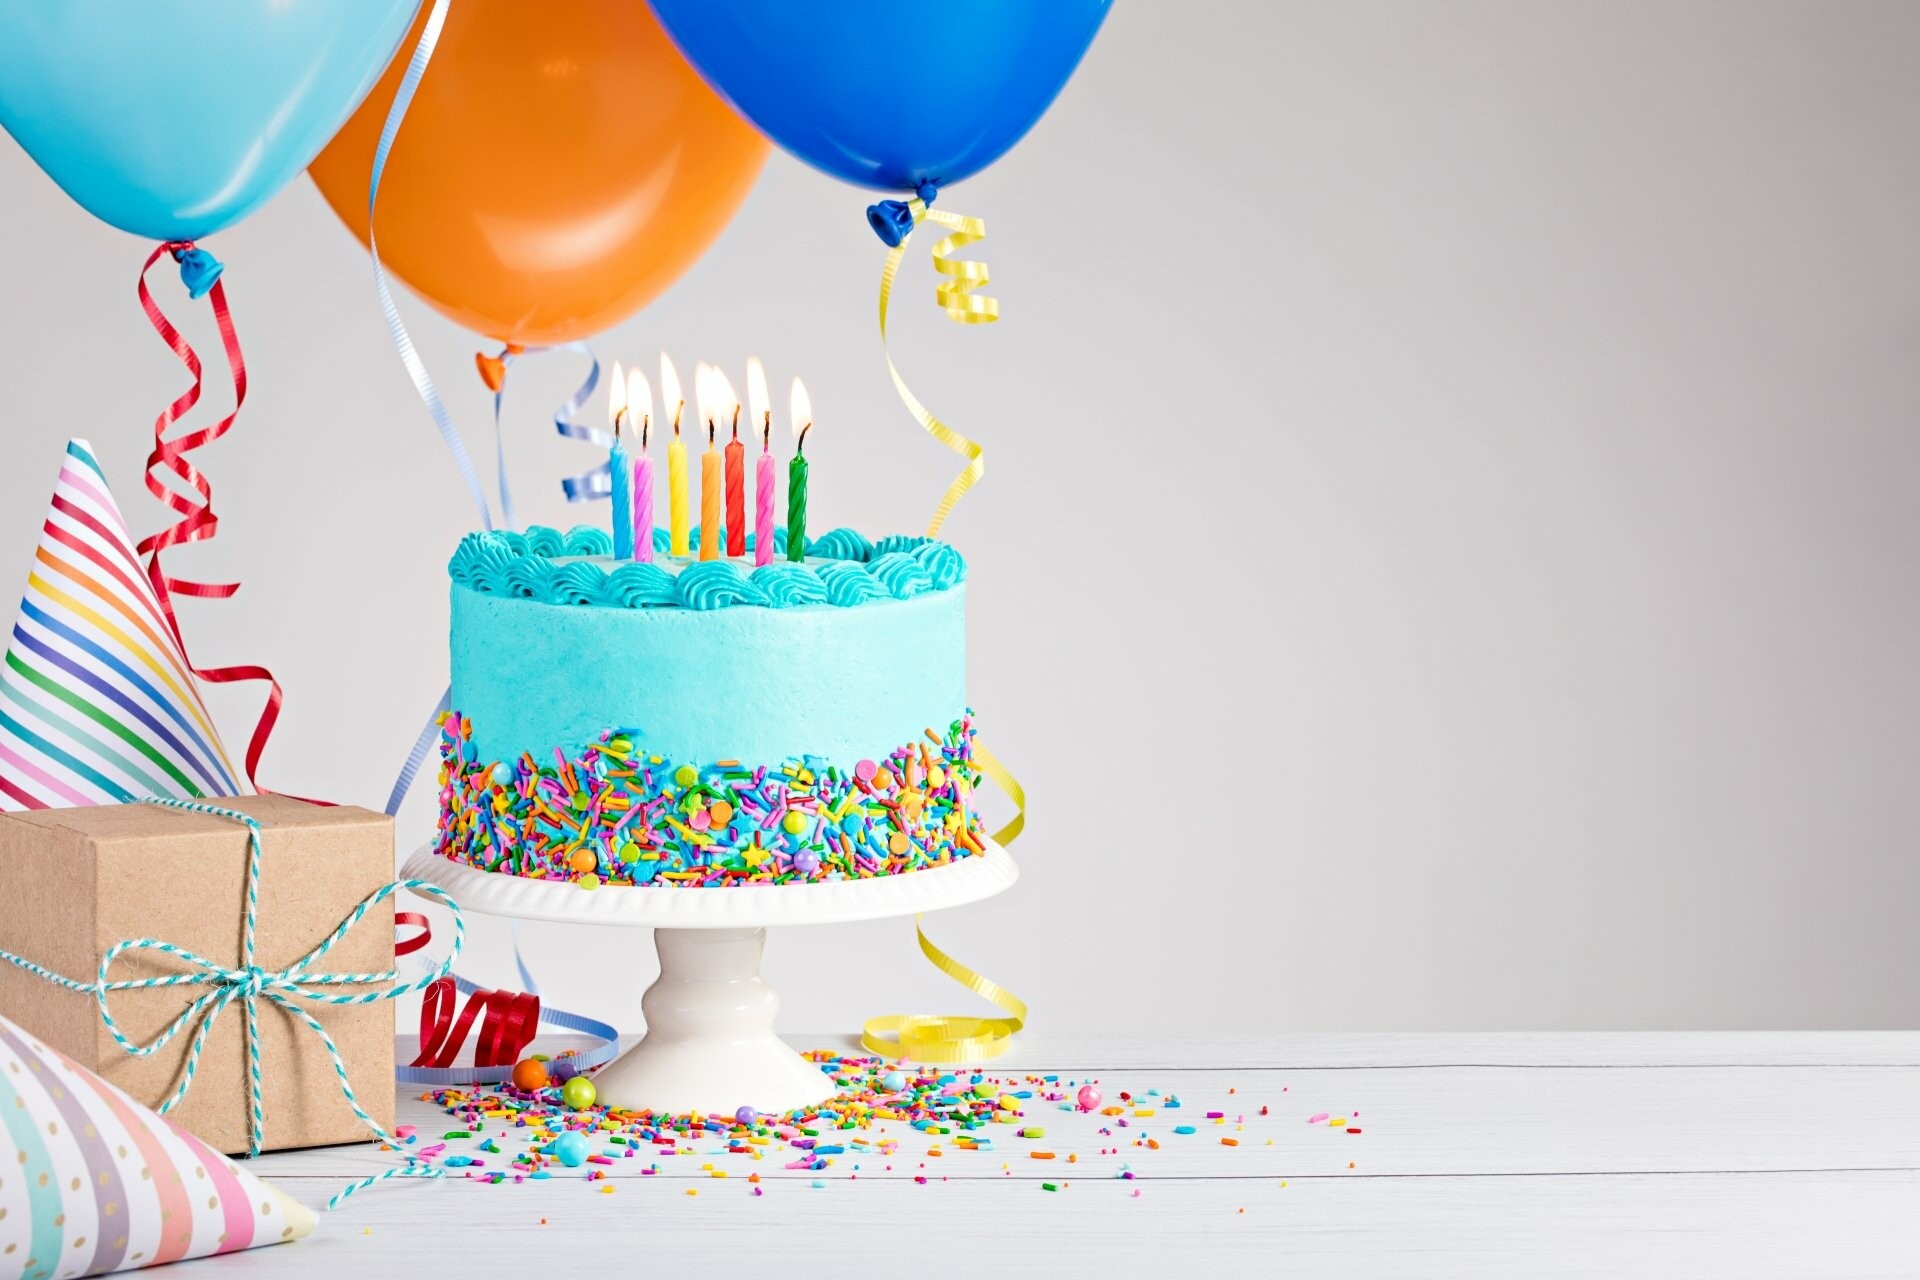 Celebration: Cake, Birthday candles, Birthday party. 1920x1280 HD Wallpaper.